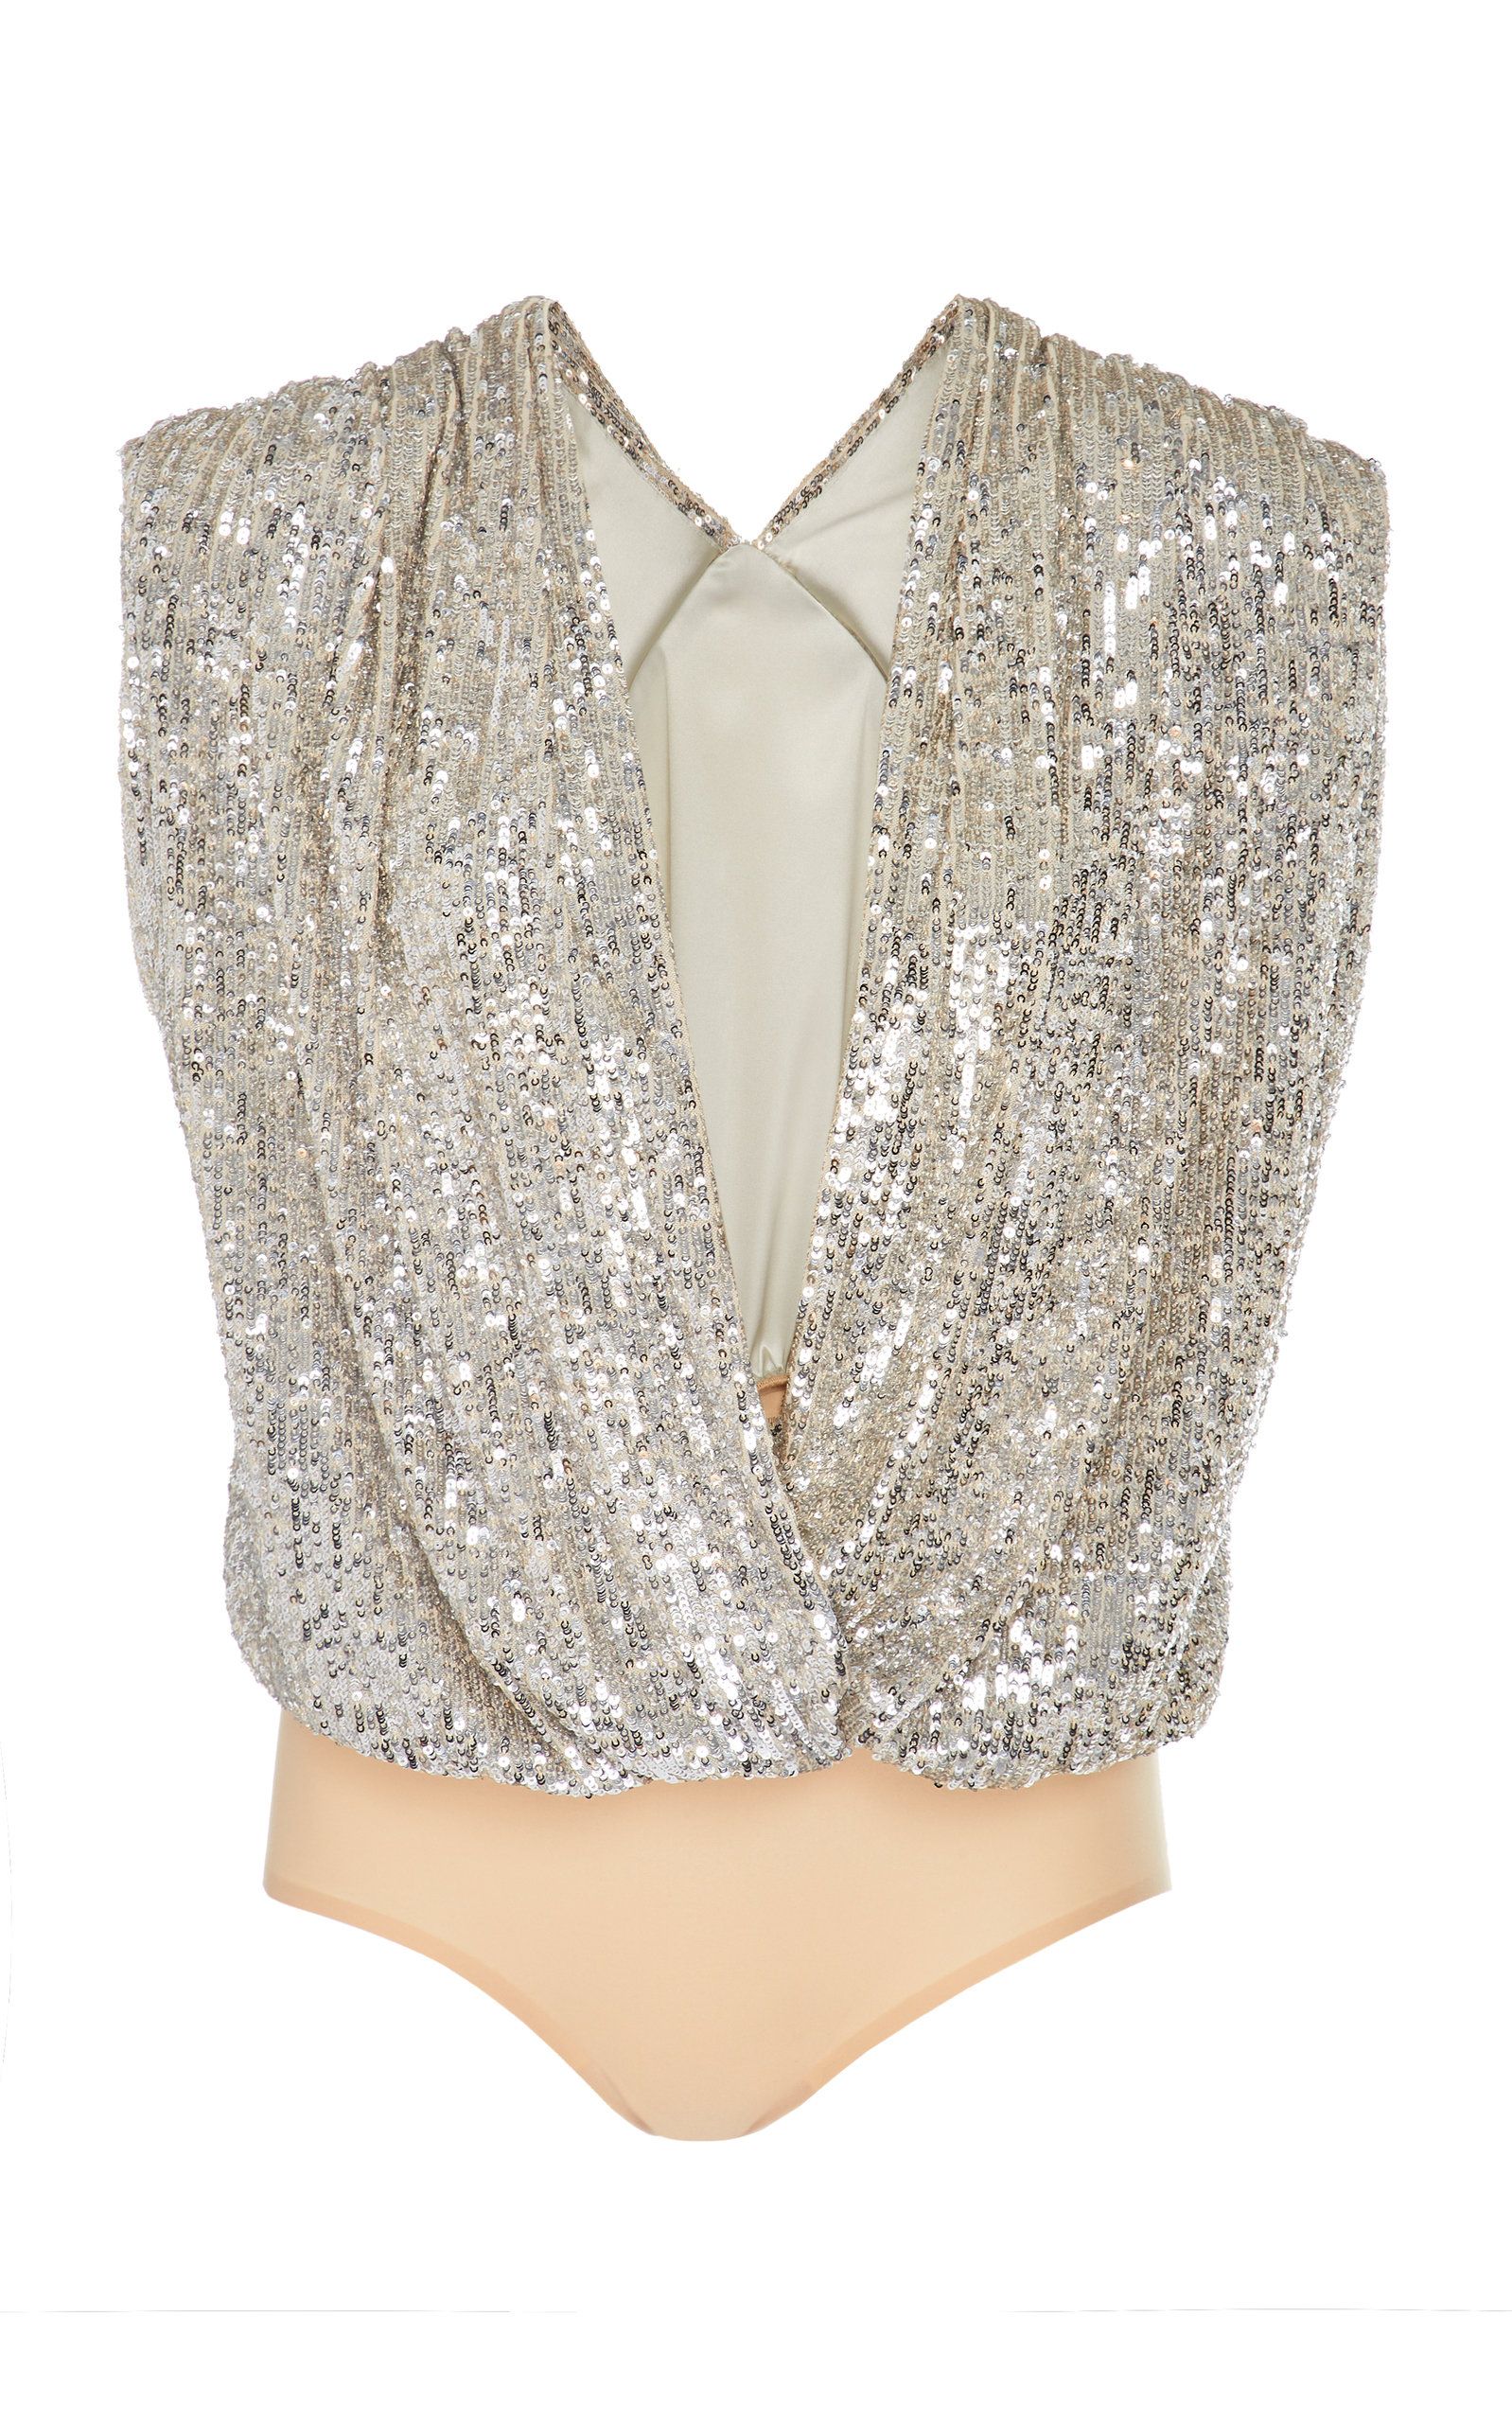 Keri Russell's Monique Lhuillier Golden Globes Dress Is Now Available ...